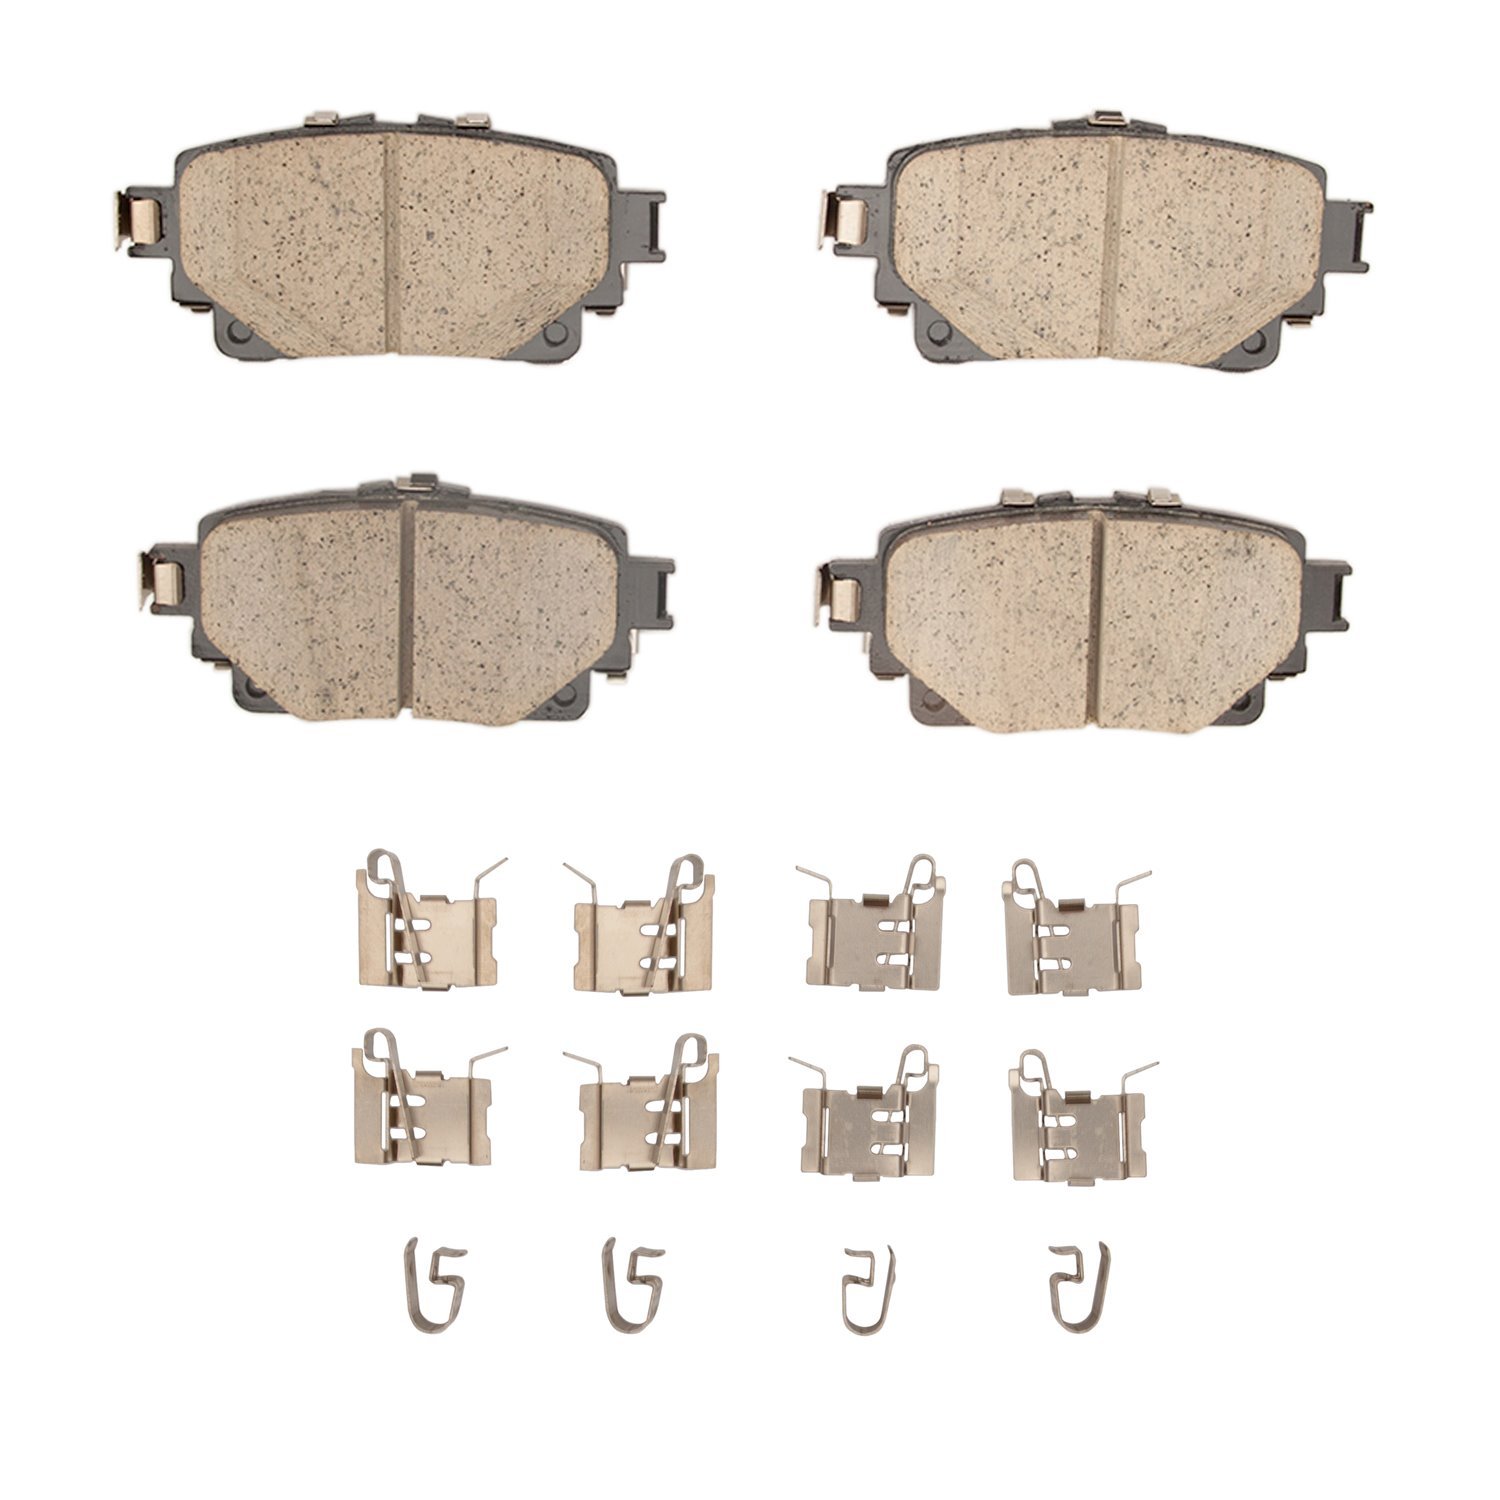 1310-2305-01 3000-Series Ceramic Brake Pads & Hardware Kit, Fits Select Multiple Makes/Models, Position: Rear